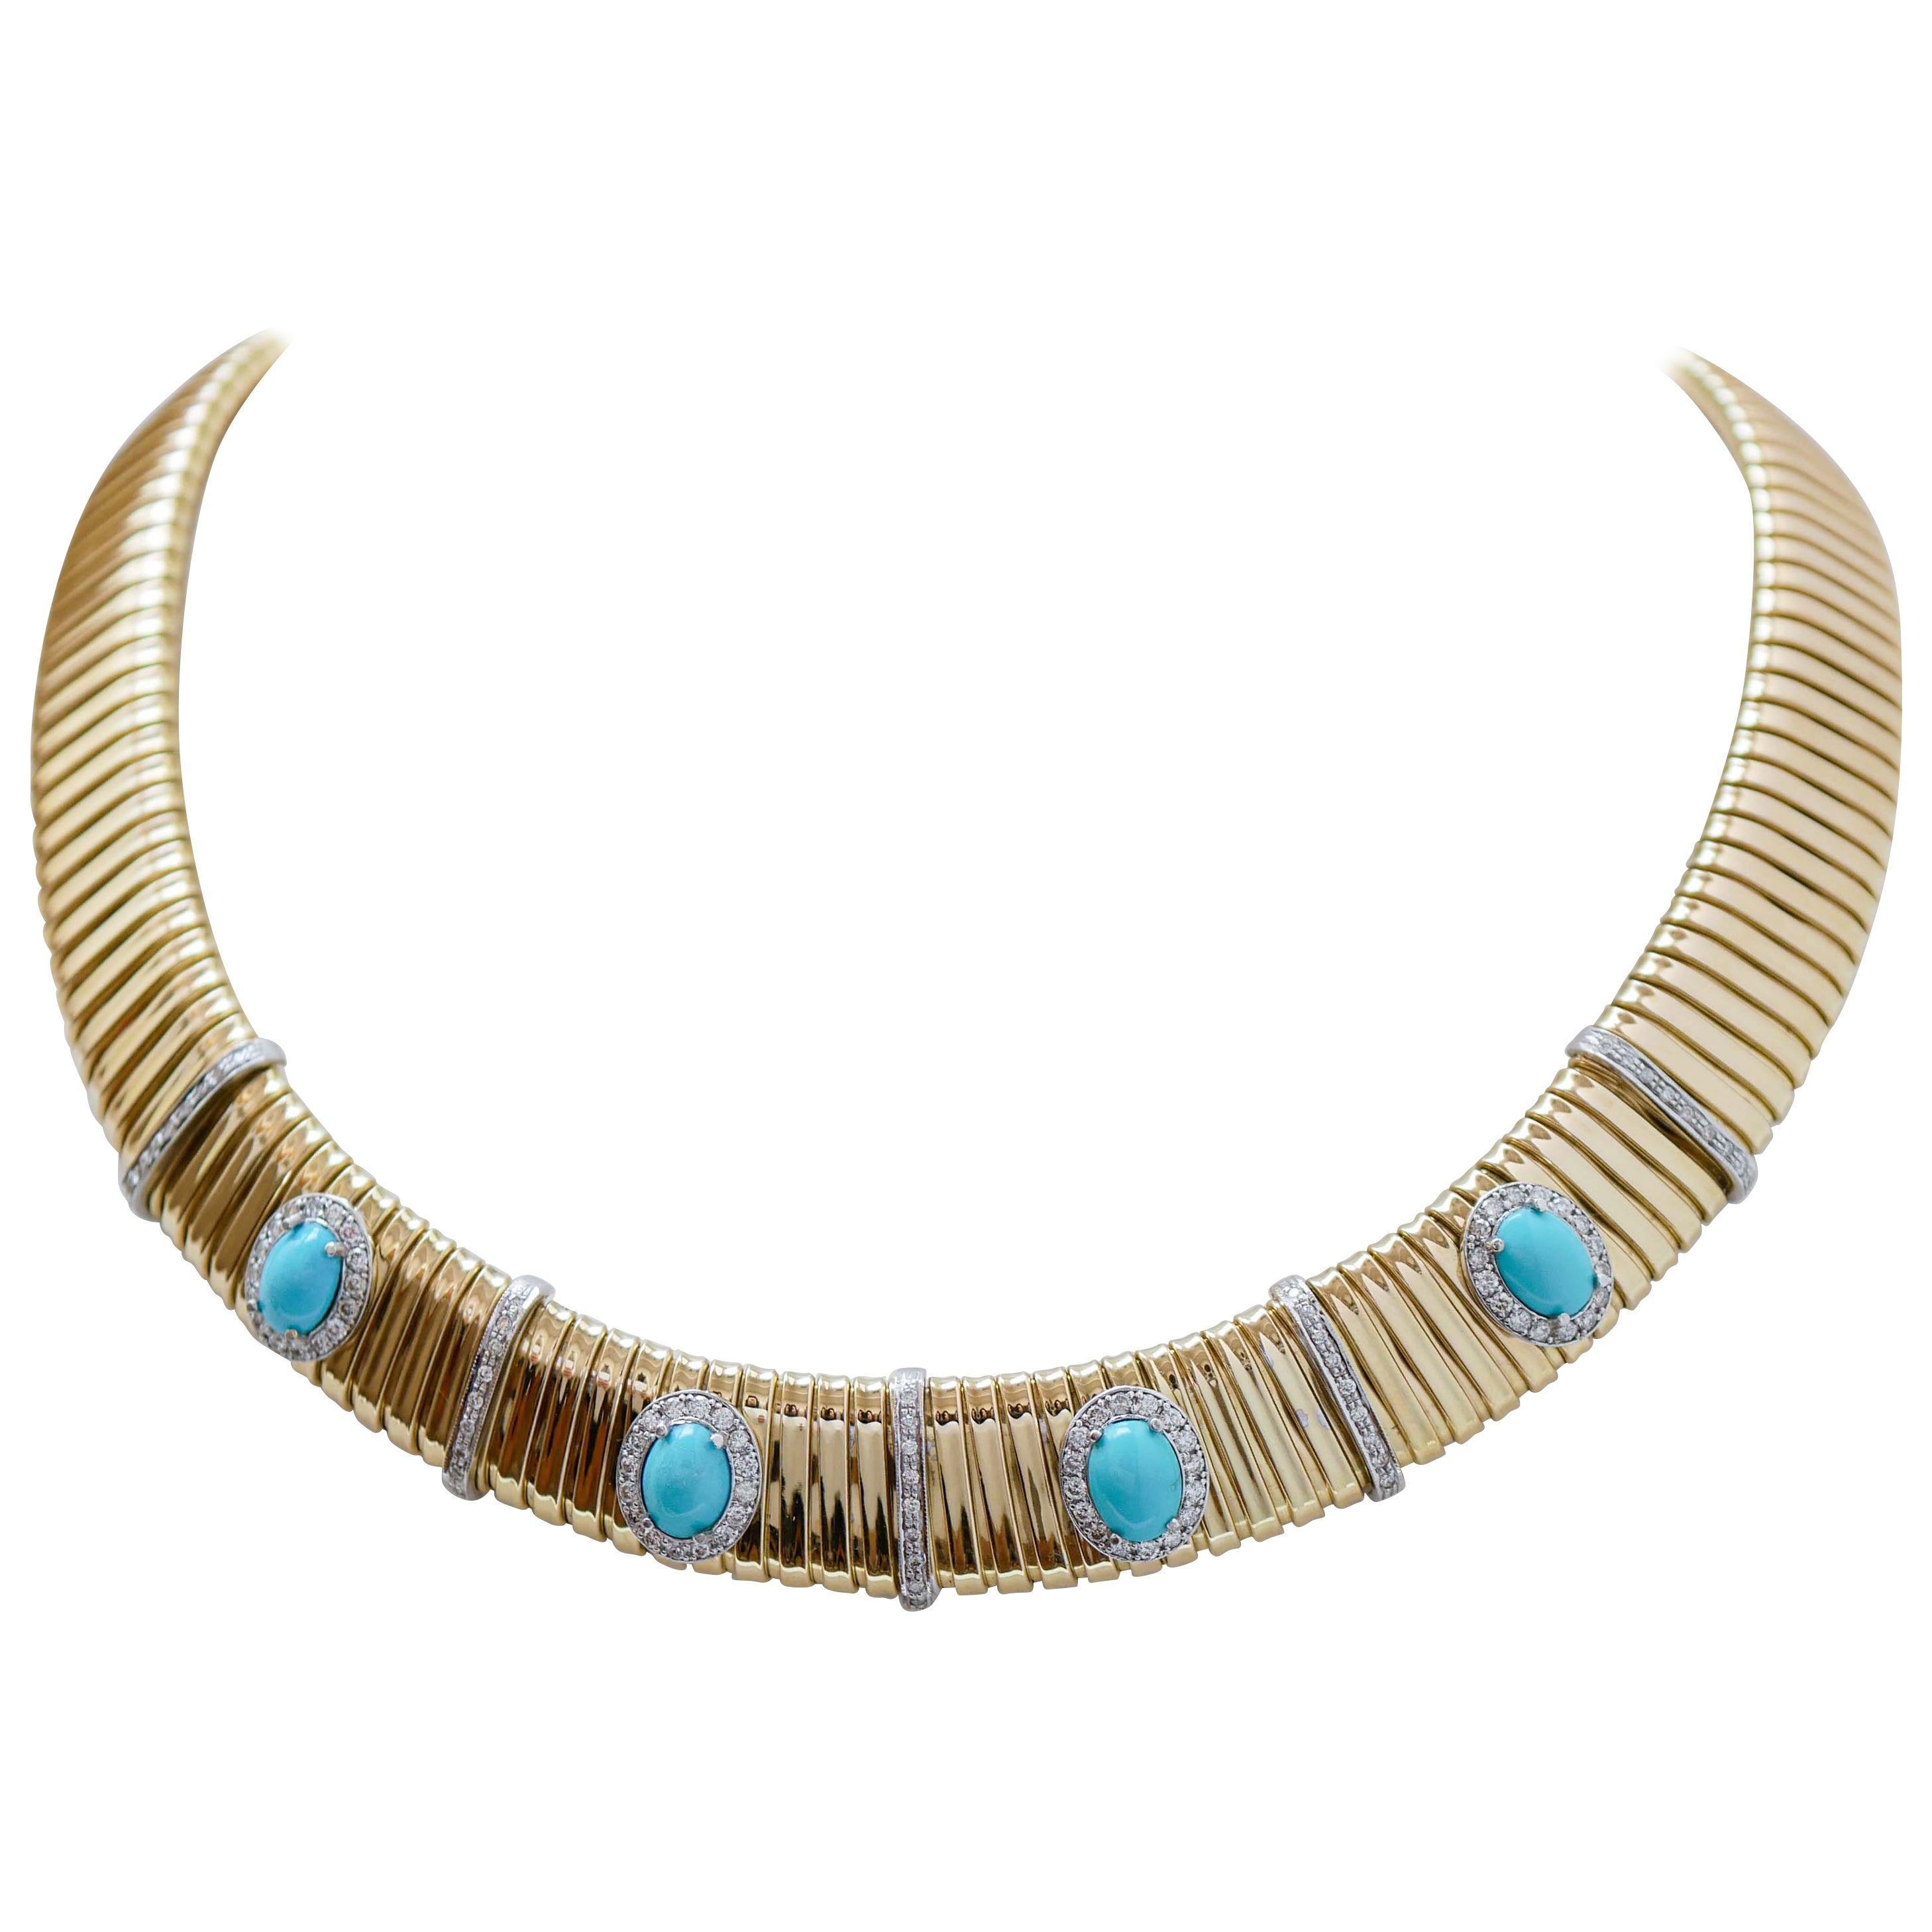 Turquoise, Diamonds, 18 Karat Yellow Gold and White Gold Tubogas Necklace.